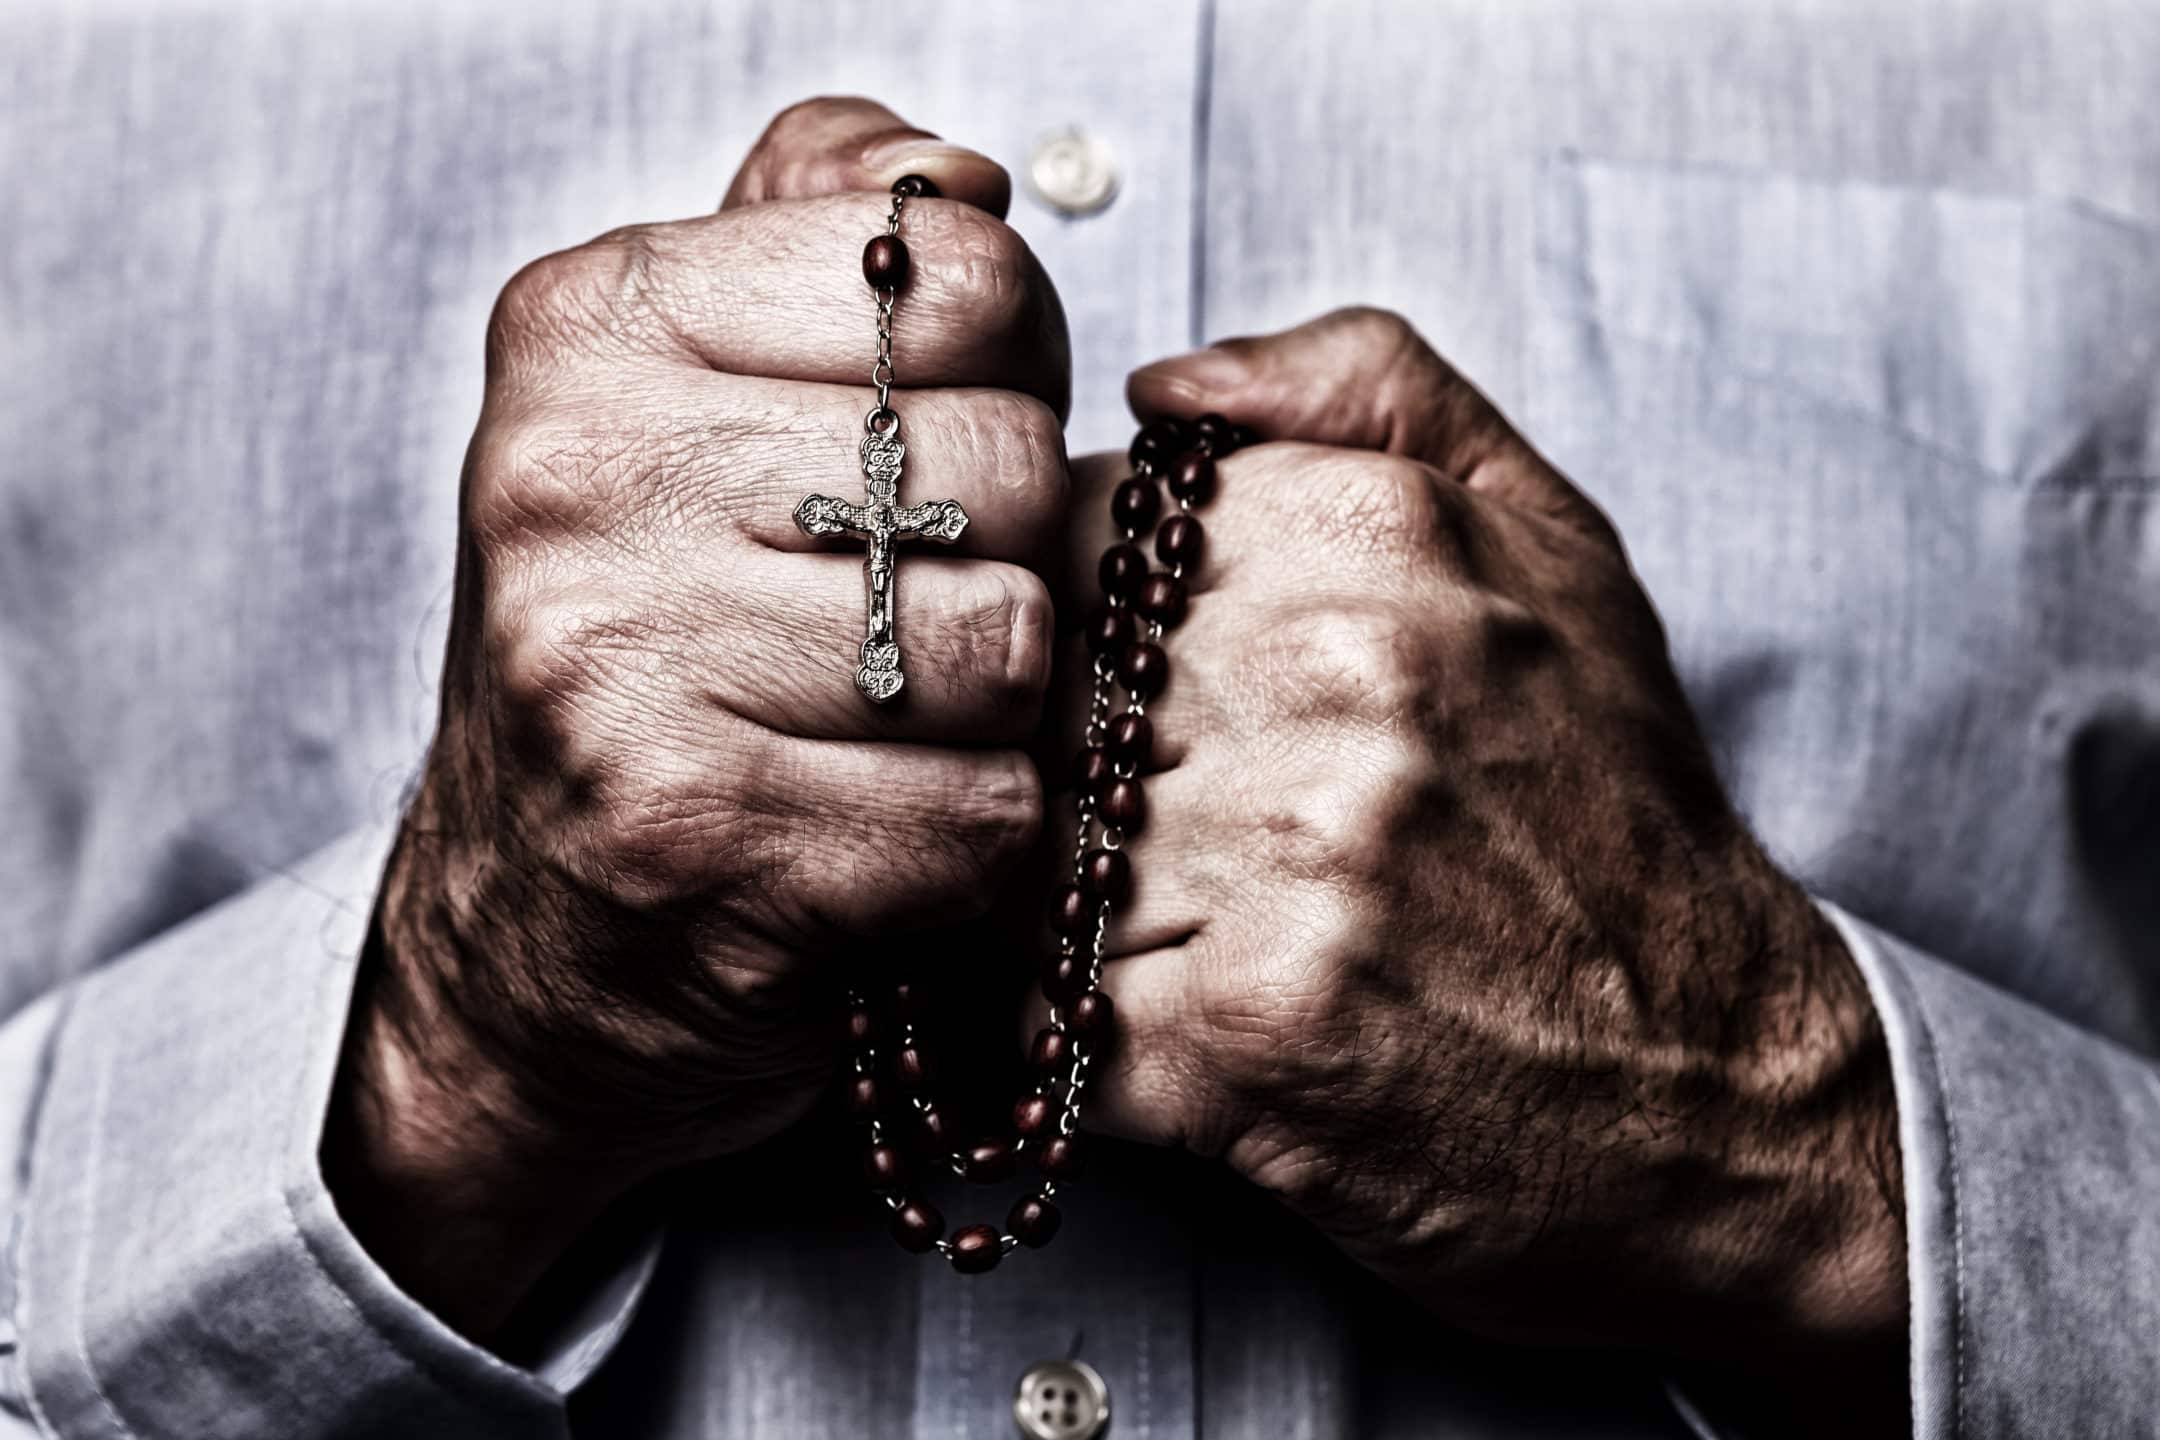 Hands enclosing a rosary